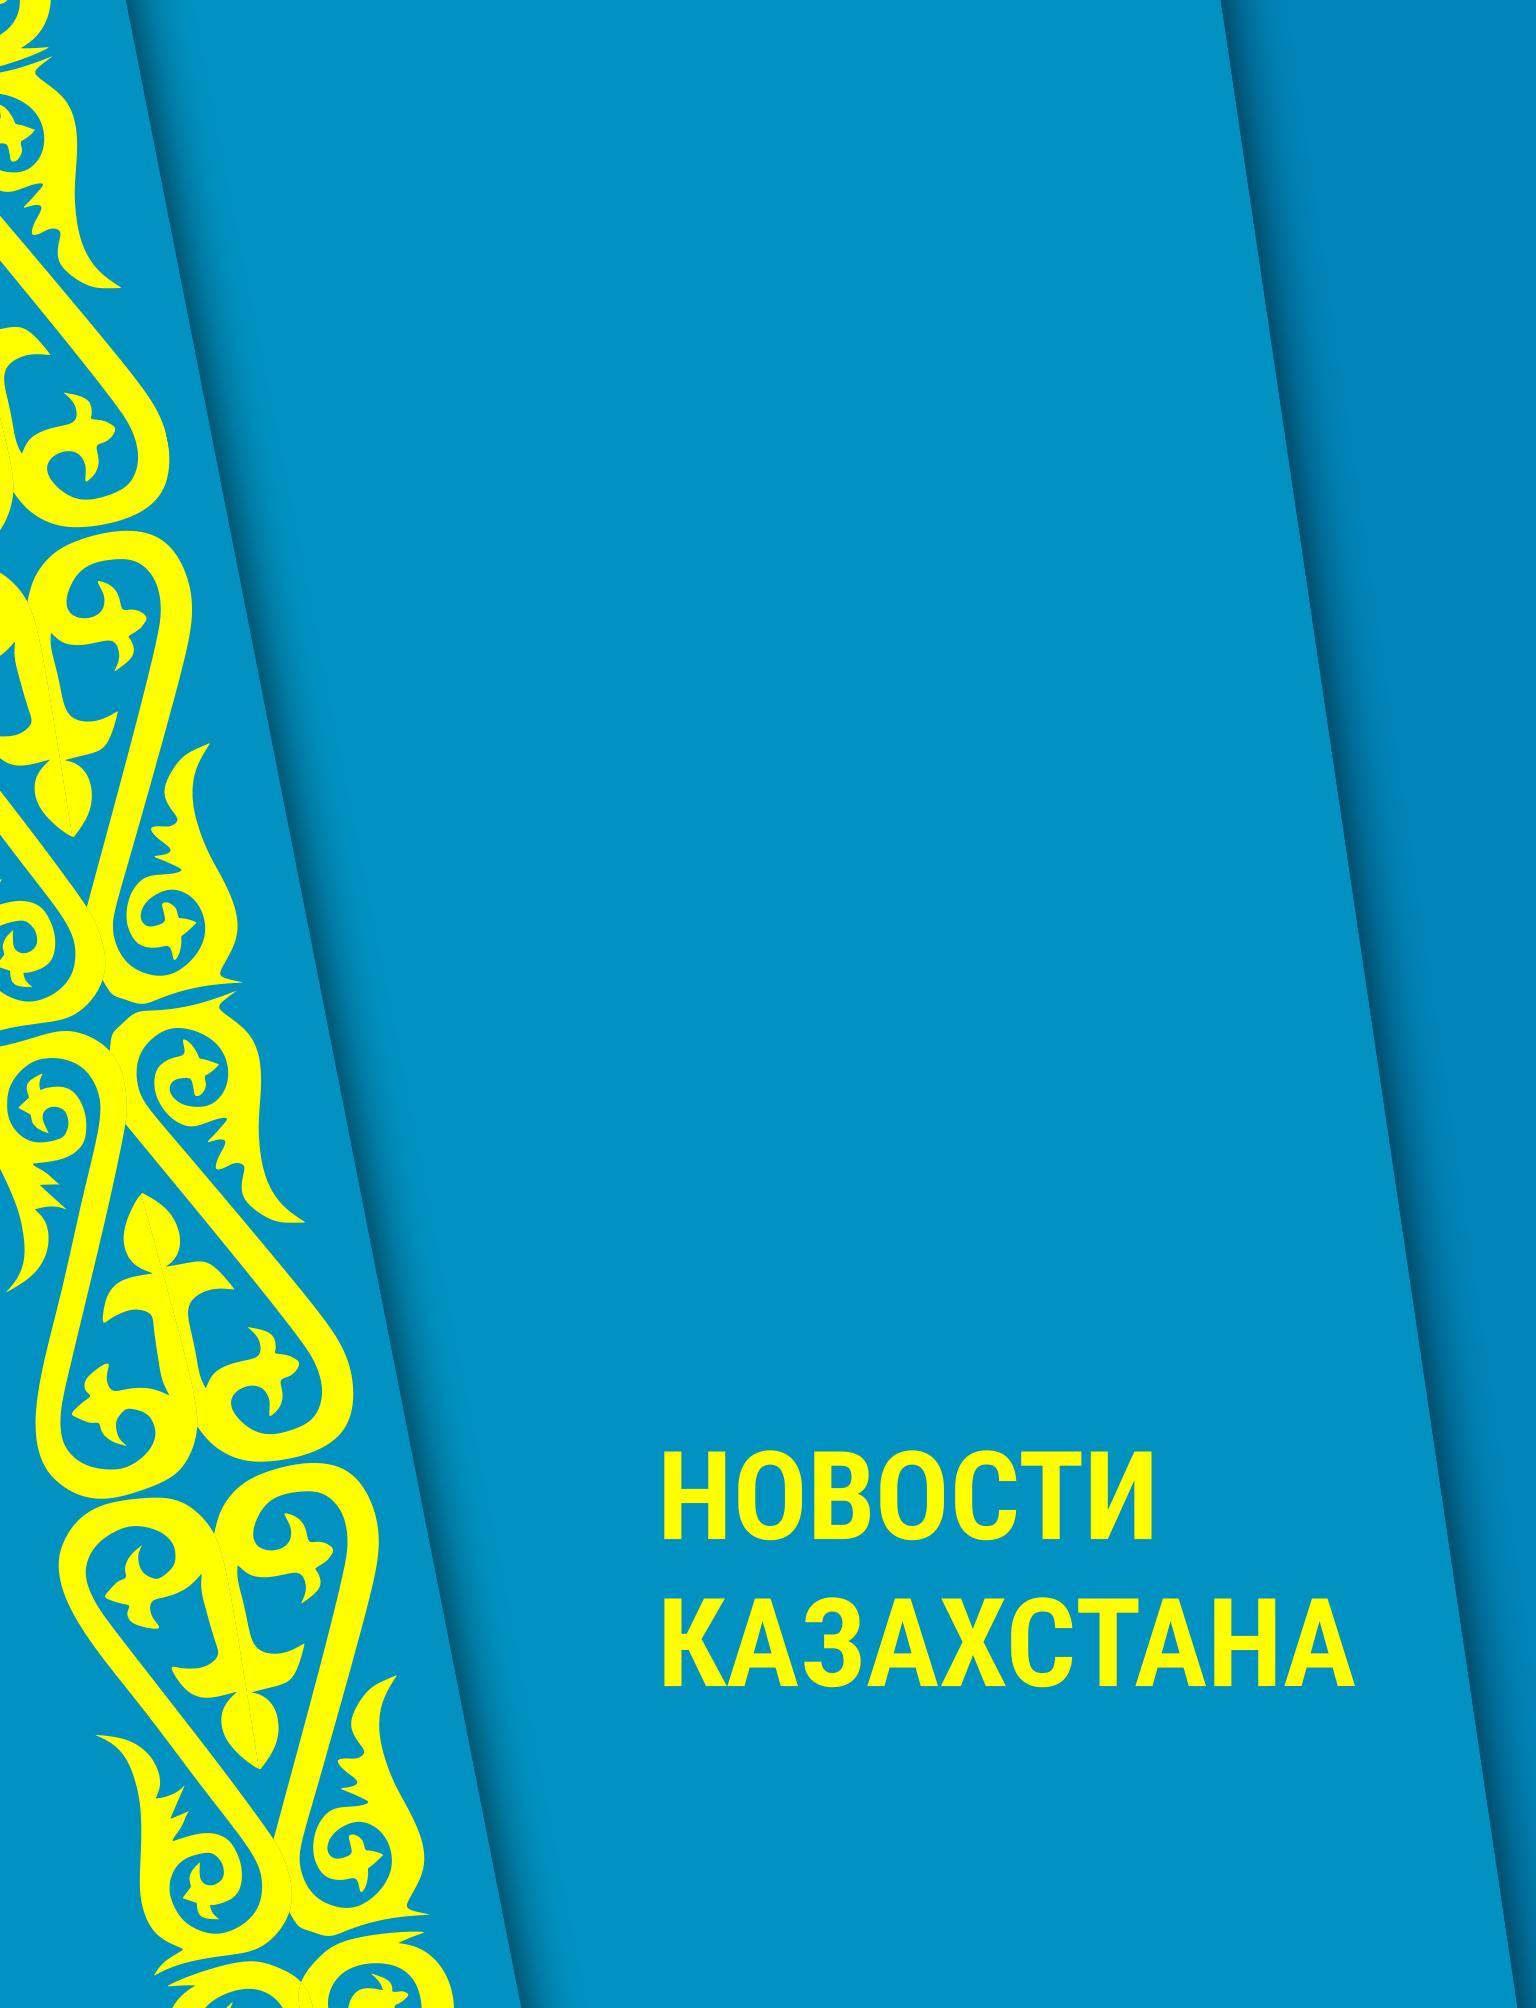 Обложка книги с казахскими орнаментами